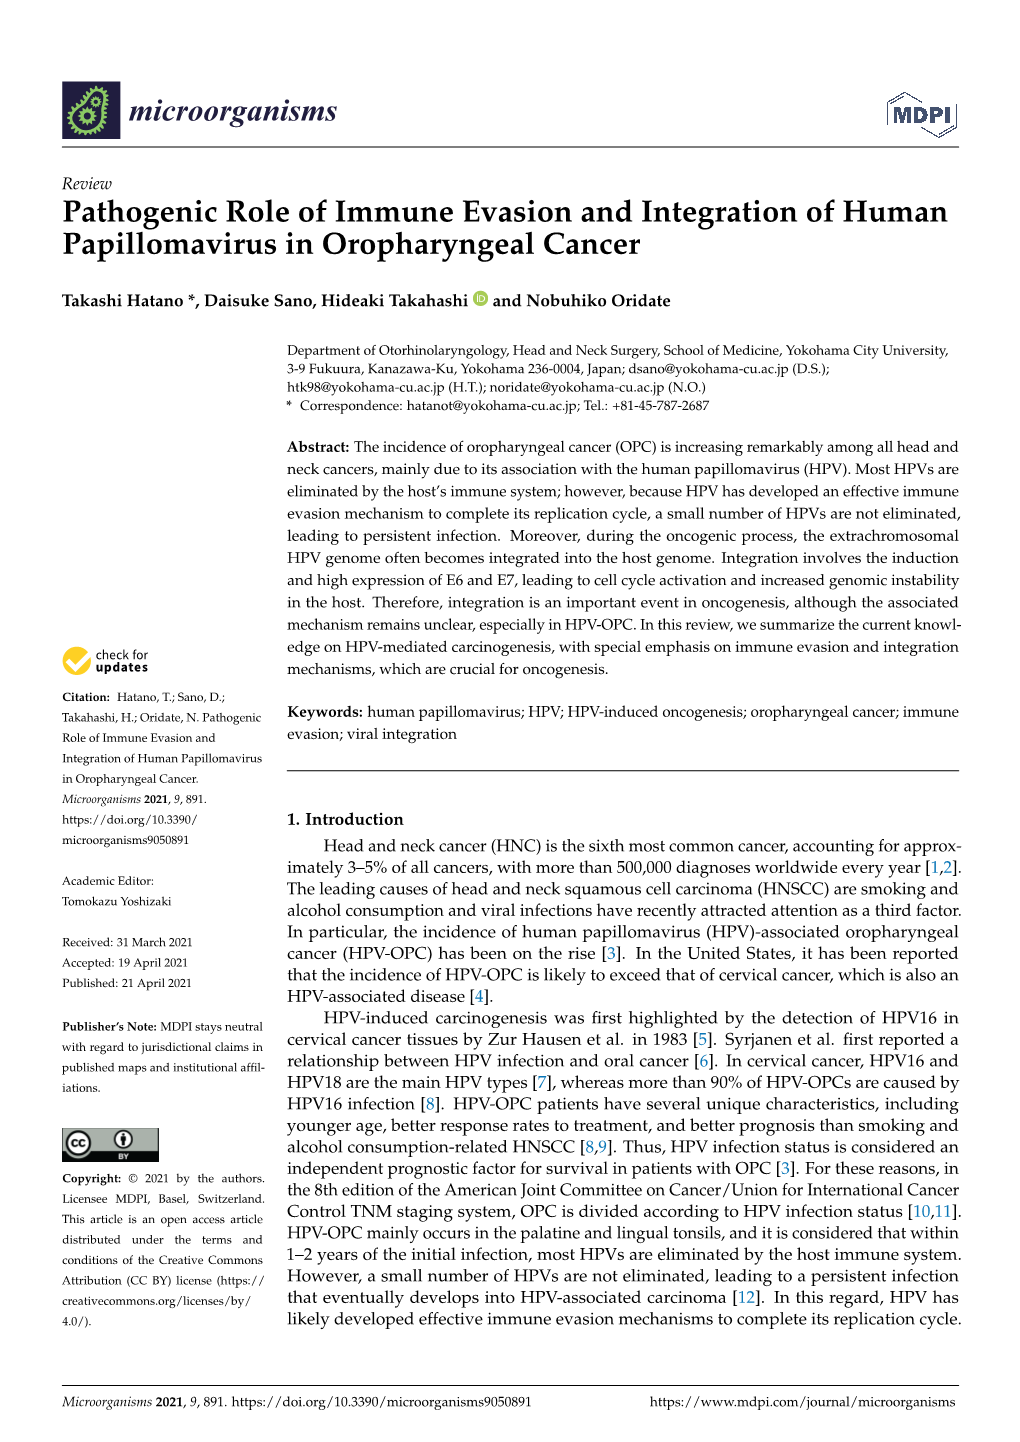 Pathogenic Role of Immune Evasion and Integration of Human Papillomavirus in Oropharyngeal Cancer